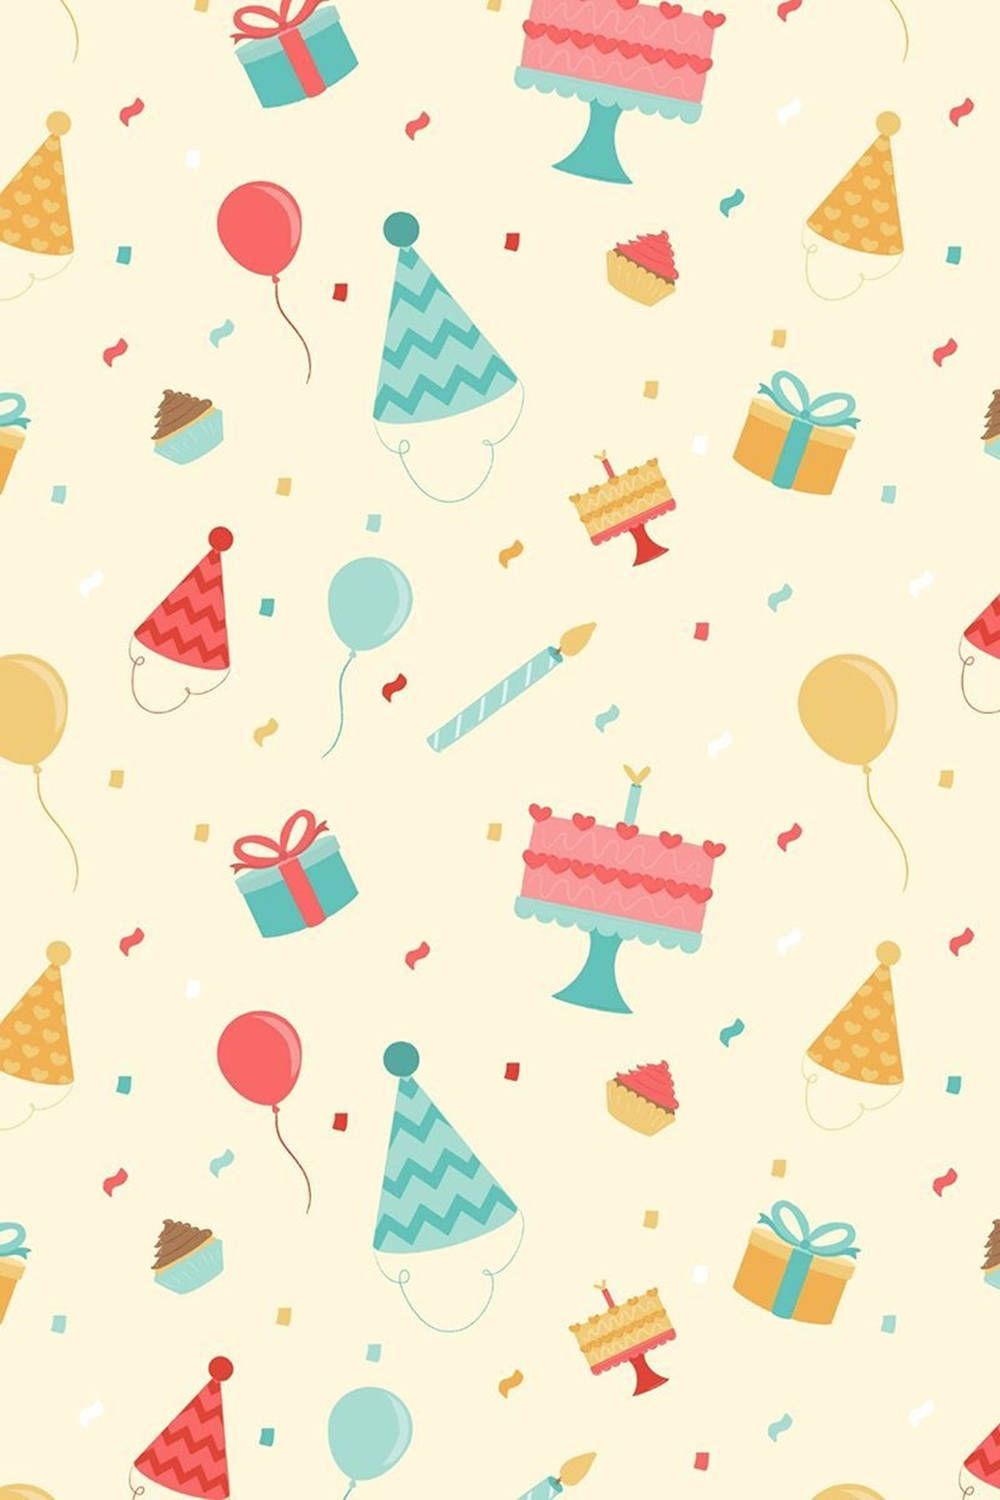 Free Aesthetic Happy Birthday Wallpaper Downloads, Aesthetic Happy Birthday Wallpaper for FREE